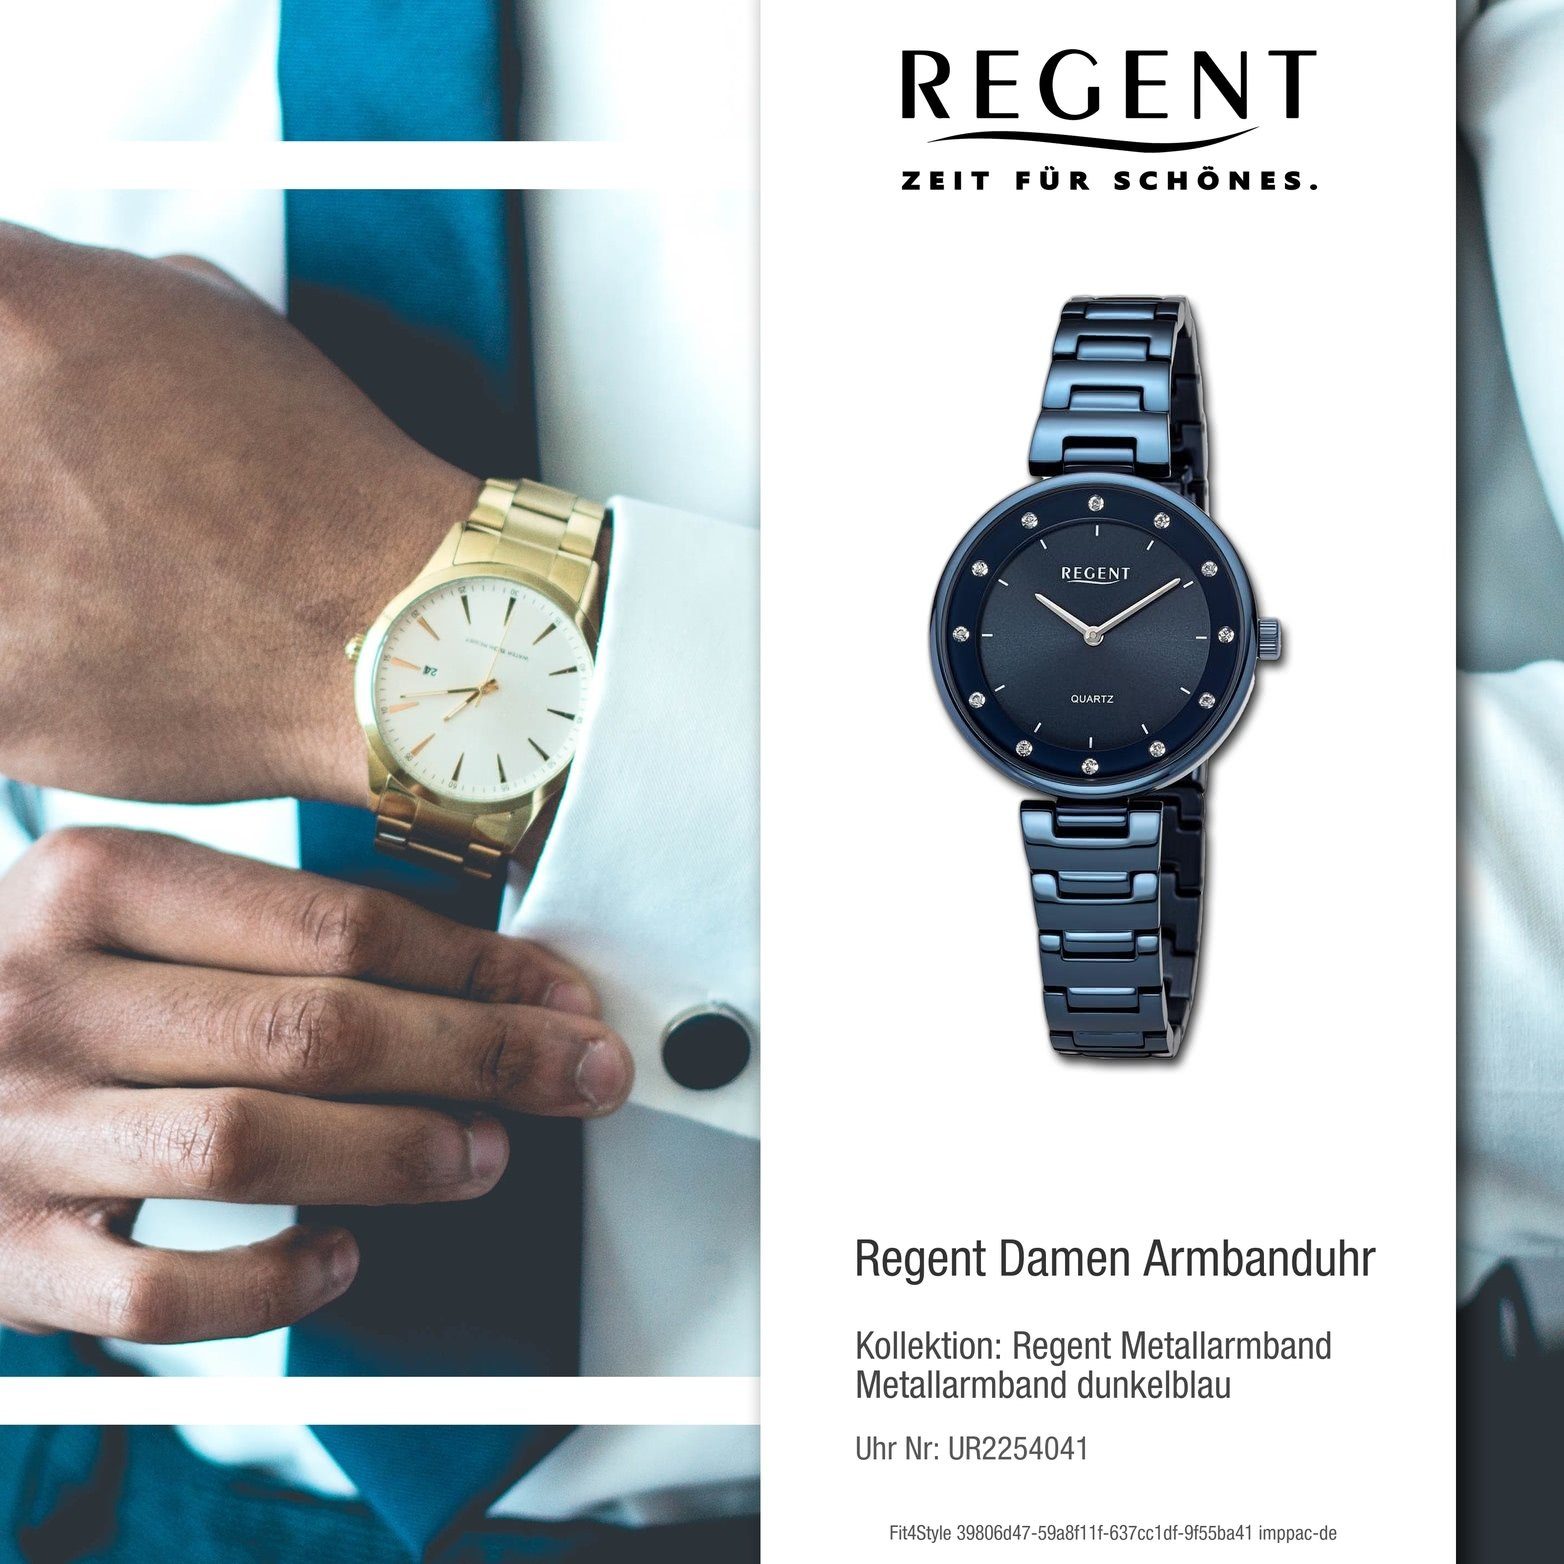 Metallarmband Regent rundes groß dunkelblau, Damen Gehäuse, Quarzuhr Analog, (ca. 34mm) Regent Damenuhr Armbanduhr